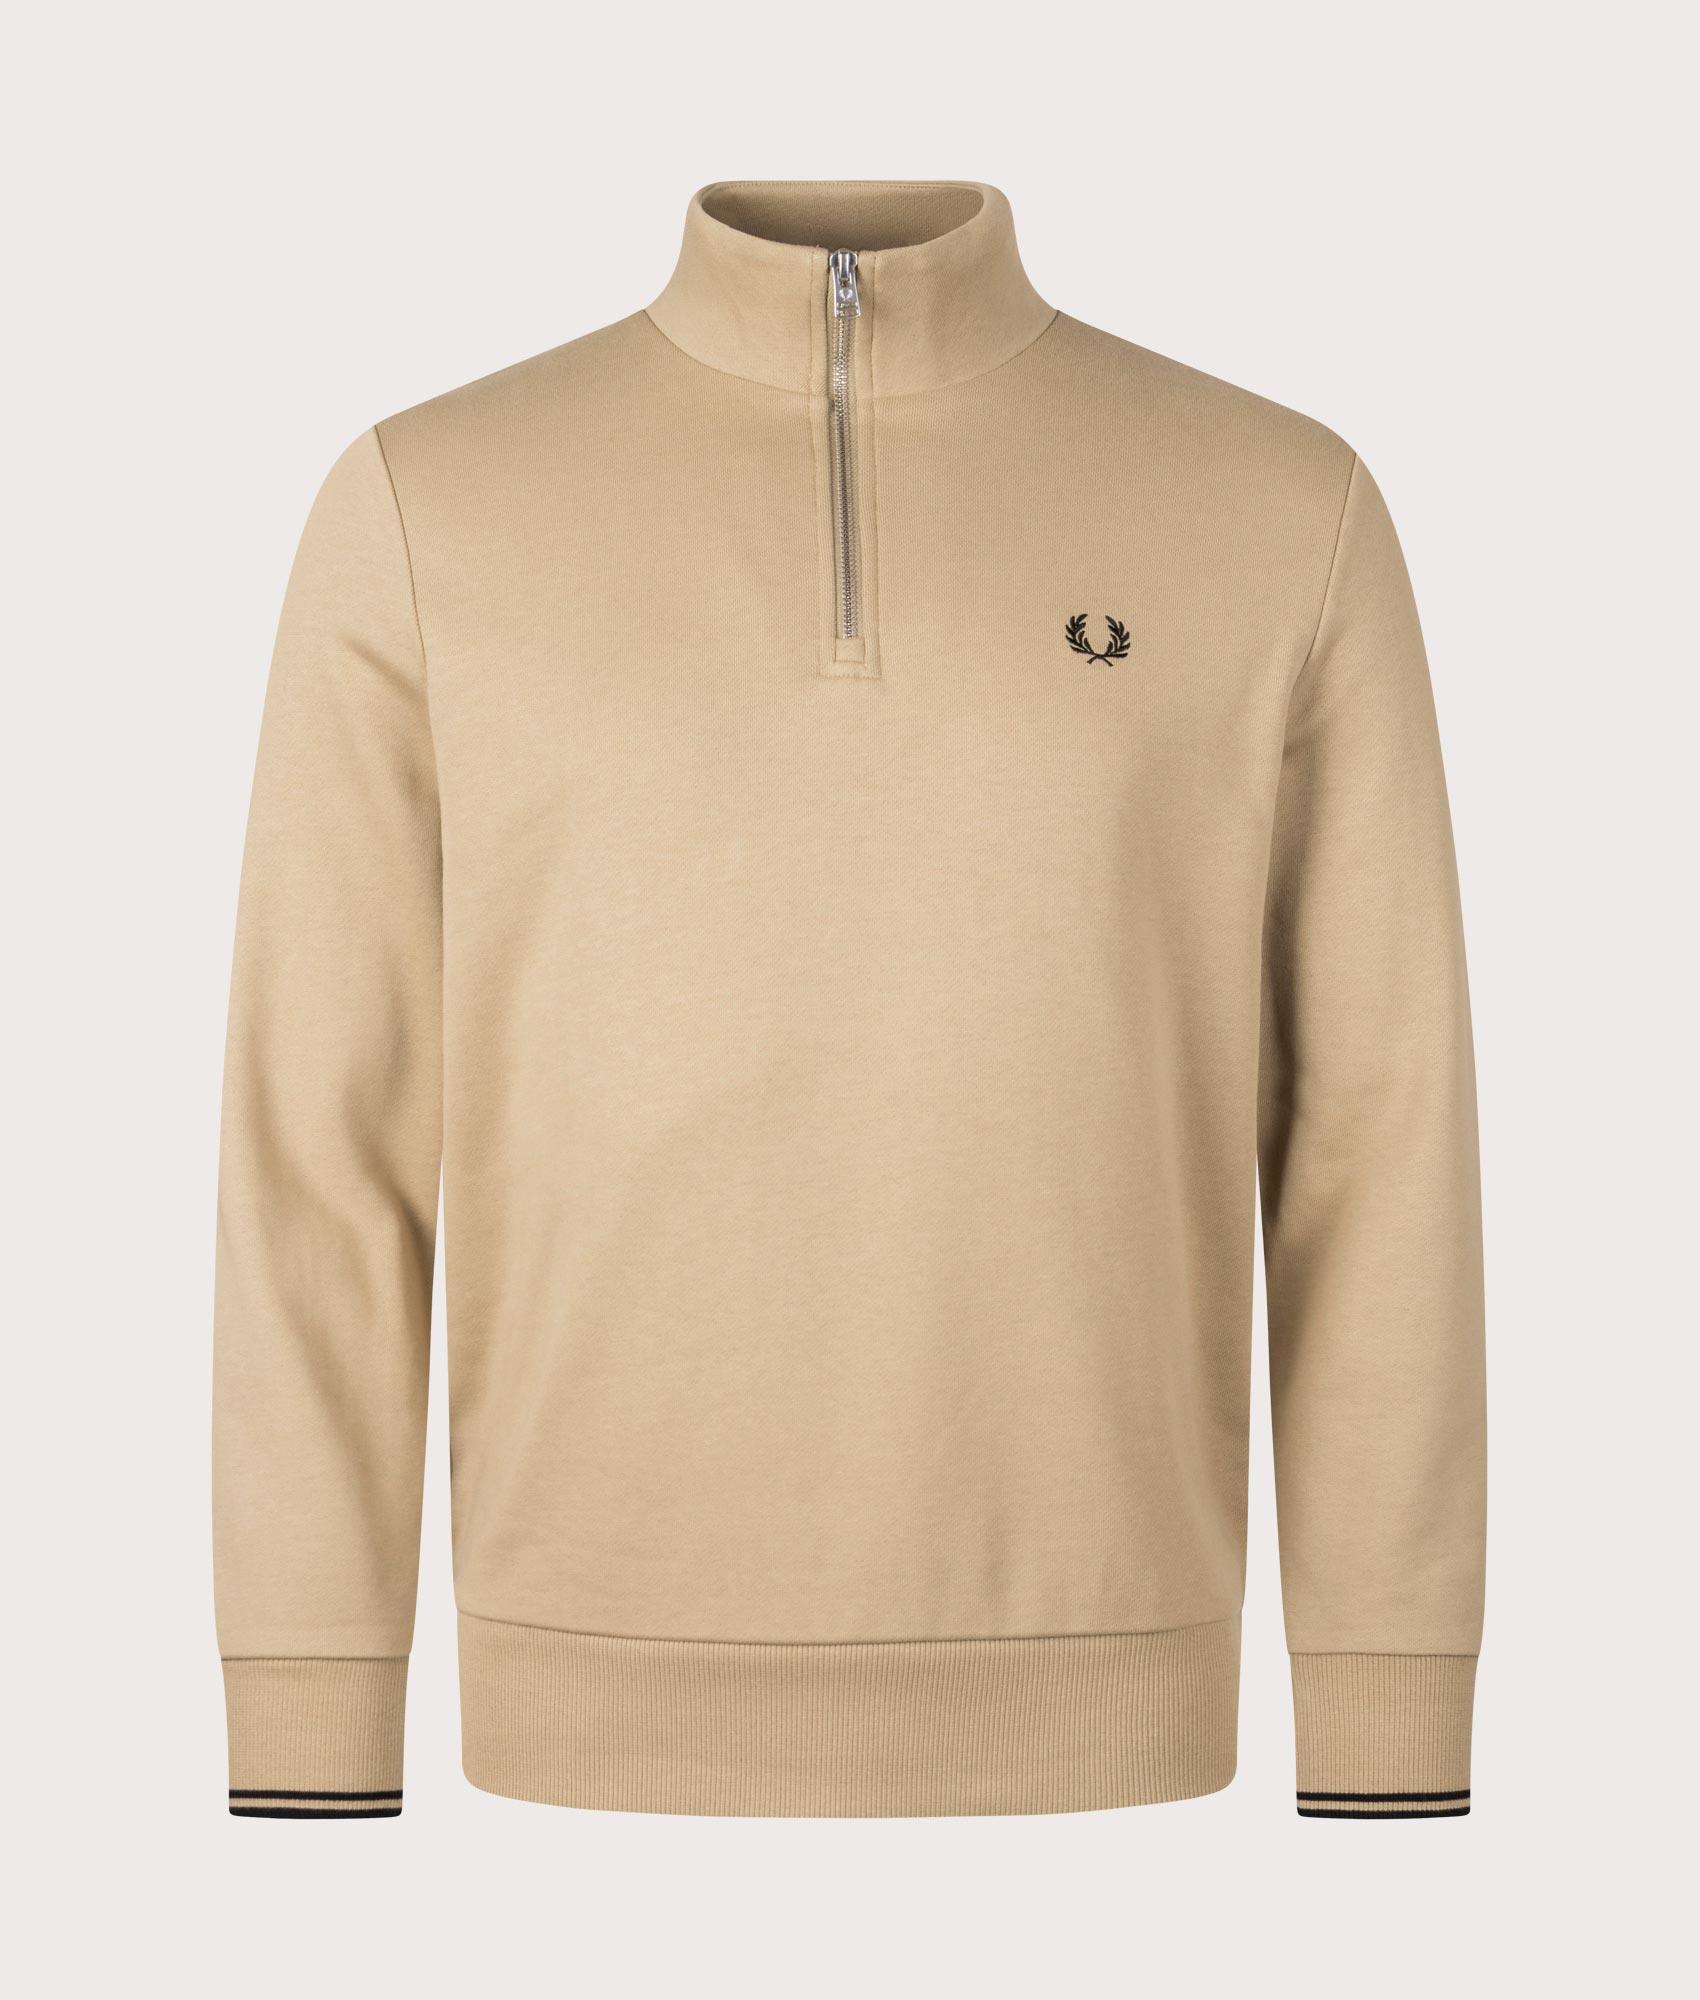 Fred Perry Mens Quarter Zip Sweatshirt - Colour: U88 Warm Stone/Black - Size: Medium